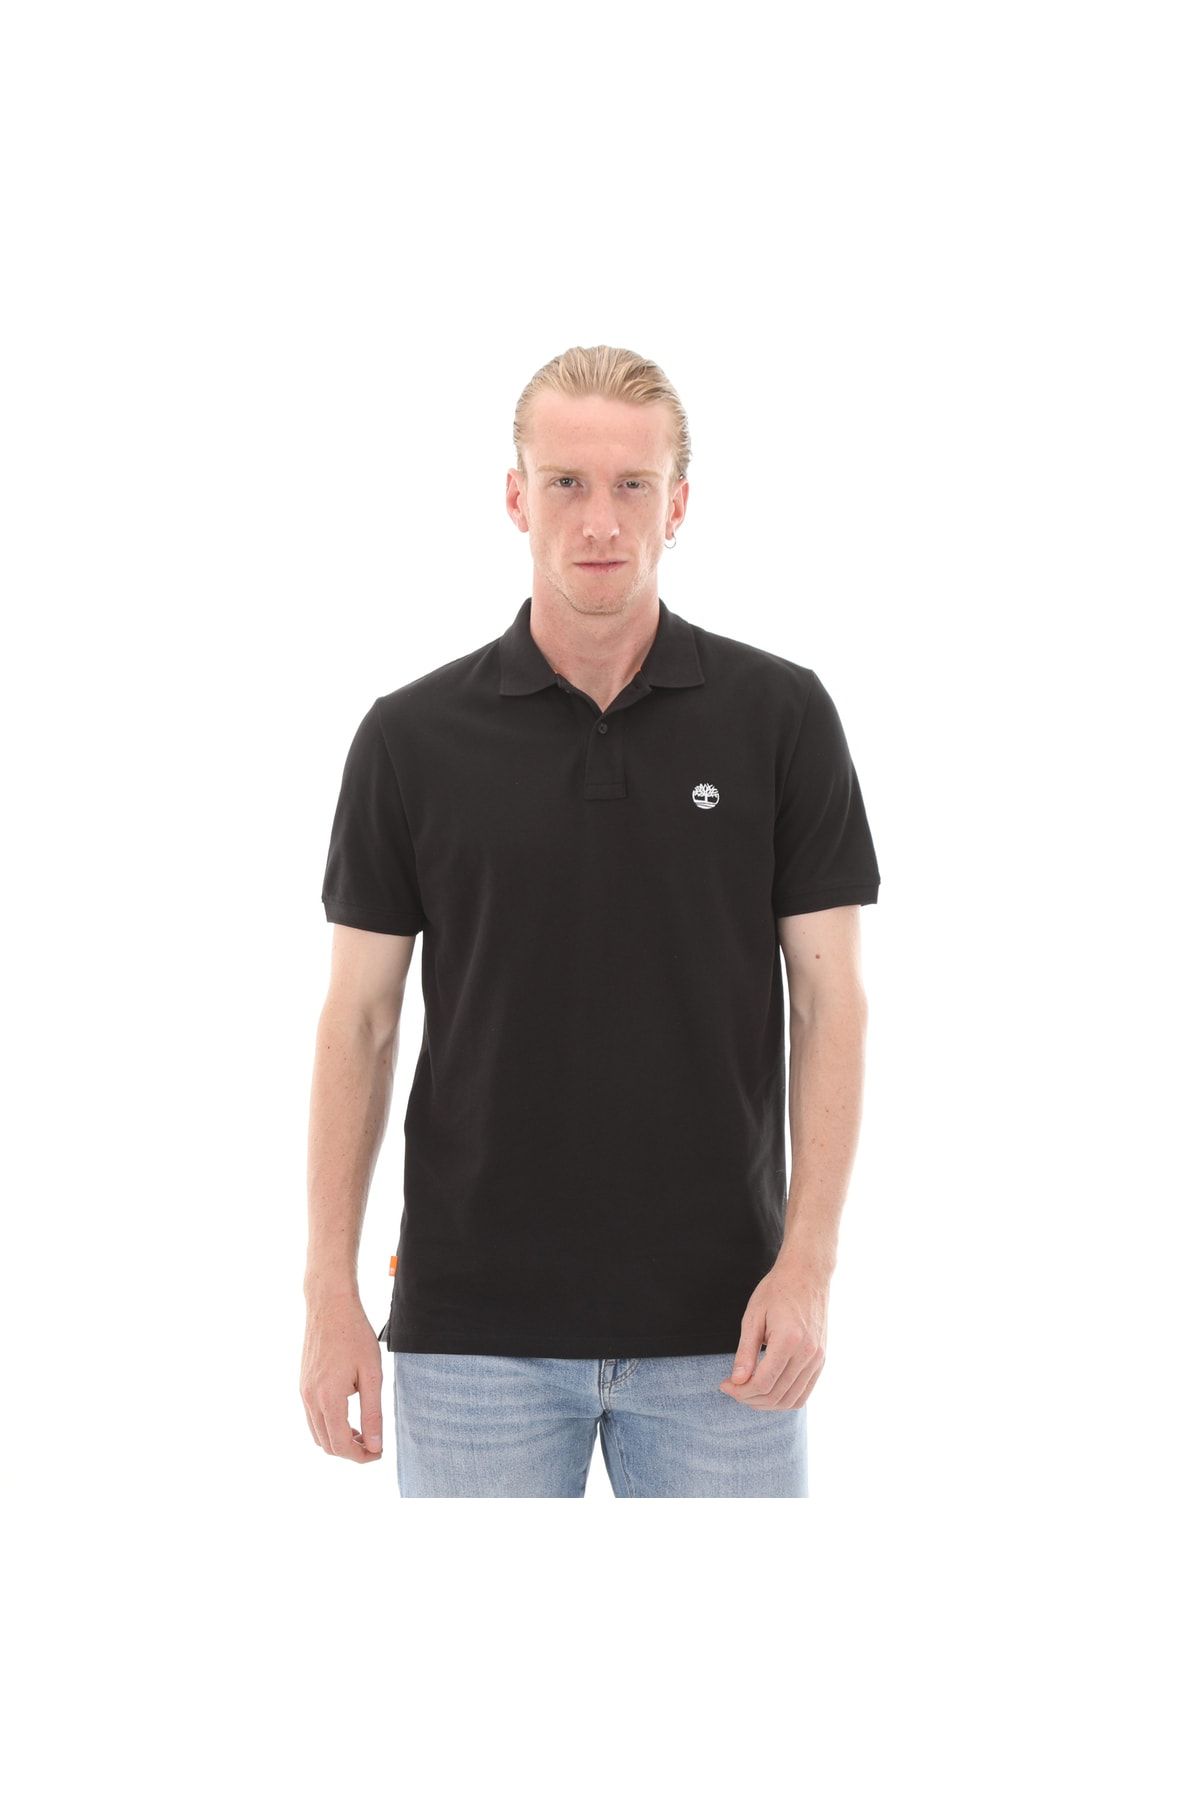 Timberland B0A26N40011-R Timberland Pique Short Sleeve Polo Erkek T-Shirt Siyah